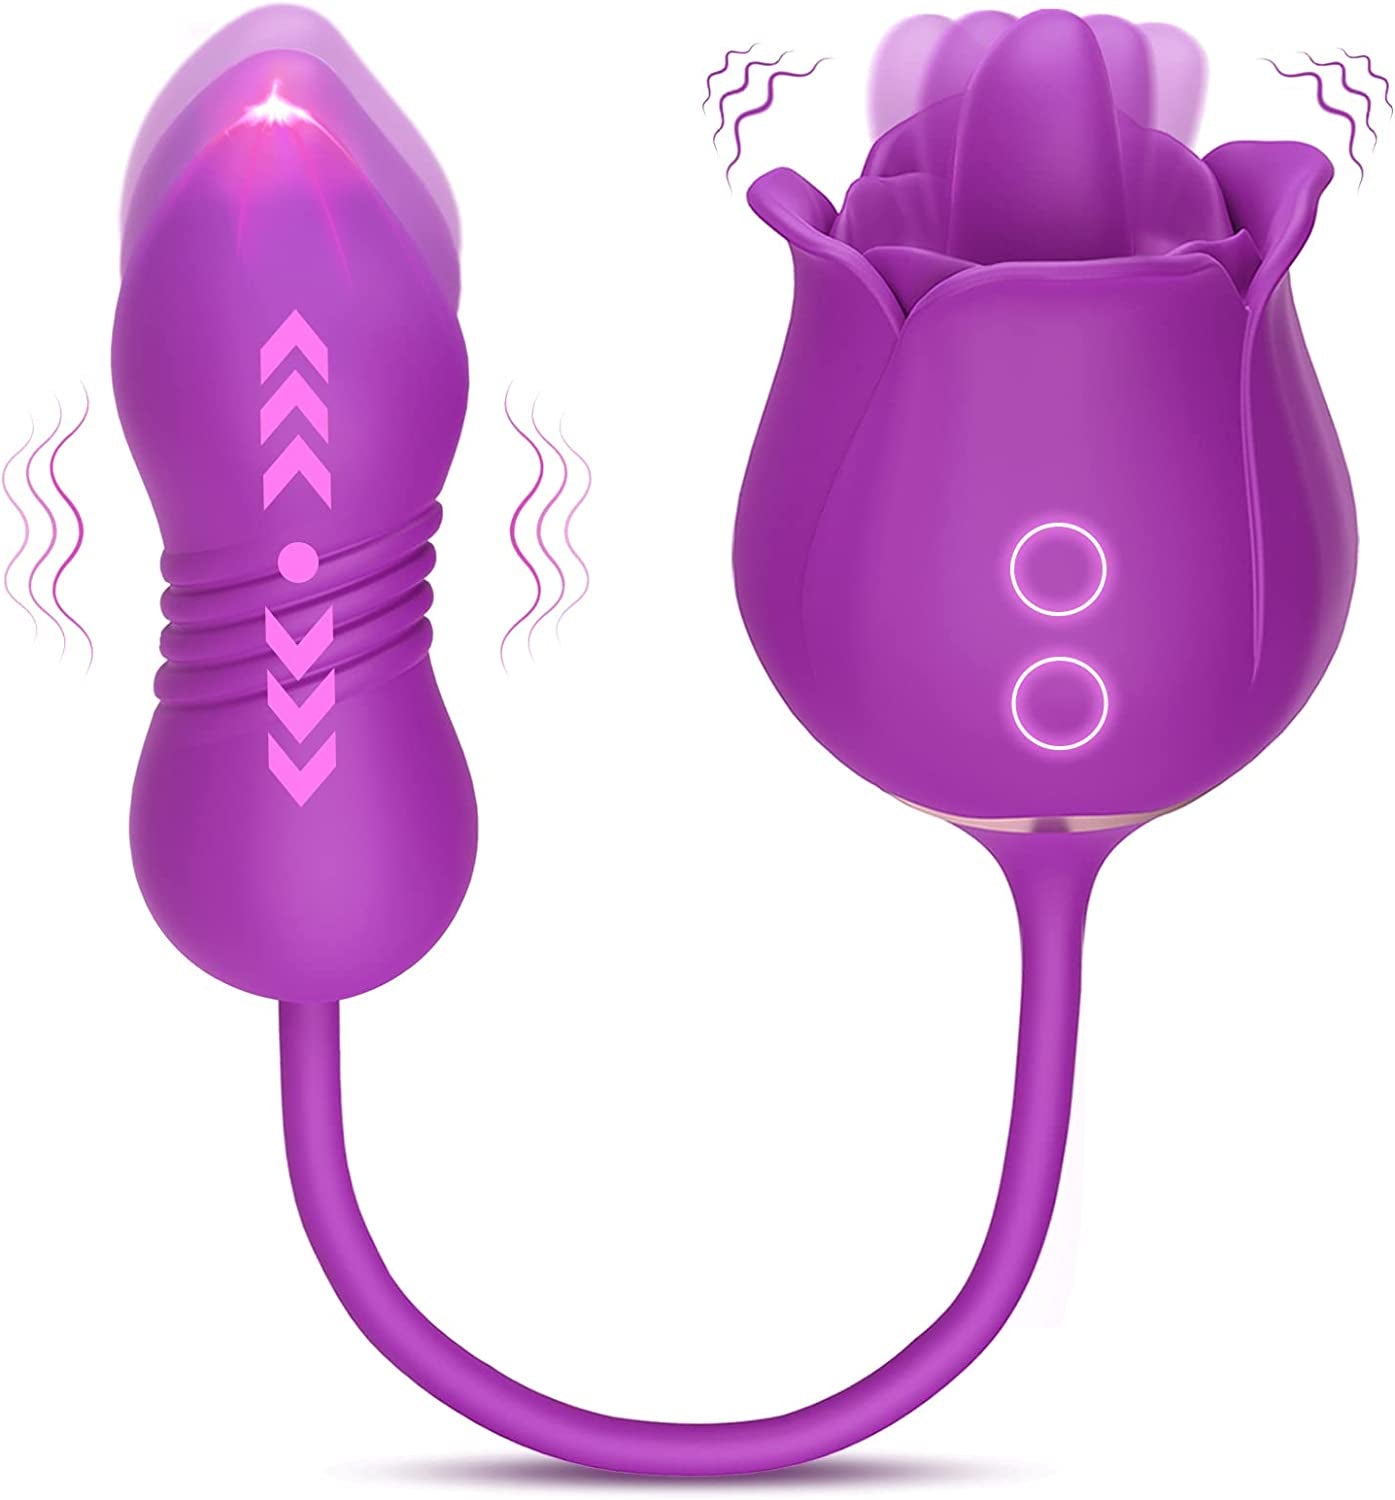 3 In 1 Rose Sex Toy Dildo Vibrator - Rose Stimulator with 9 Tongue Licking & 9 Thrusting Dildo Vibrators